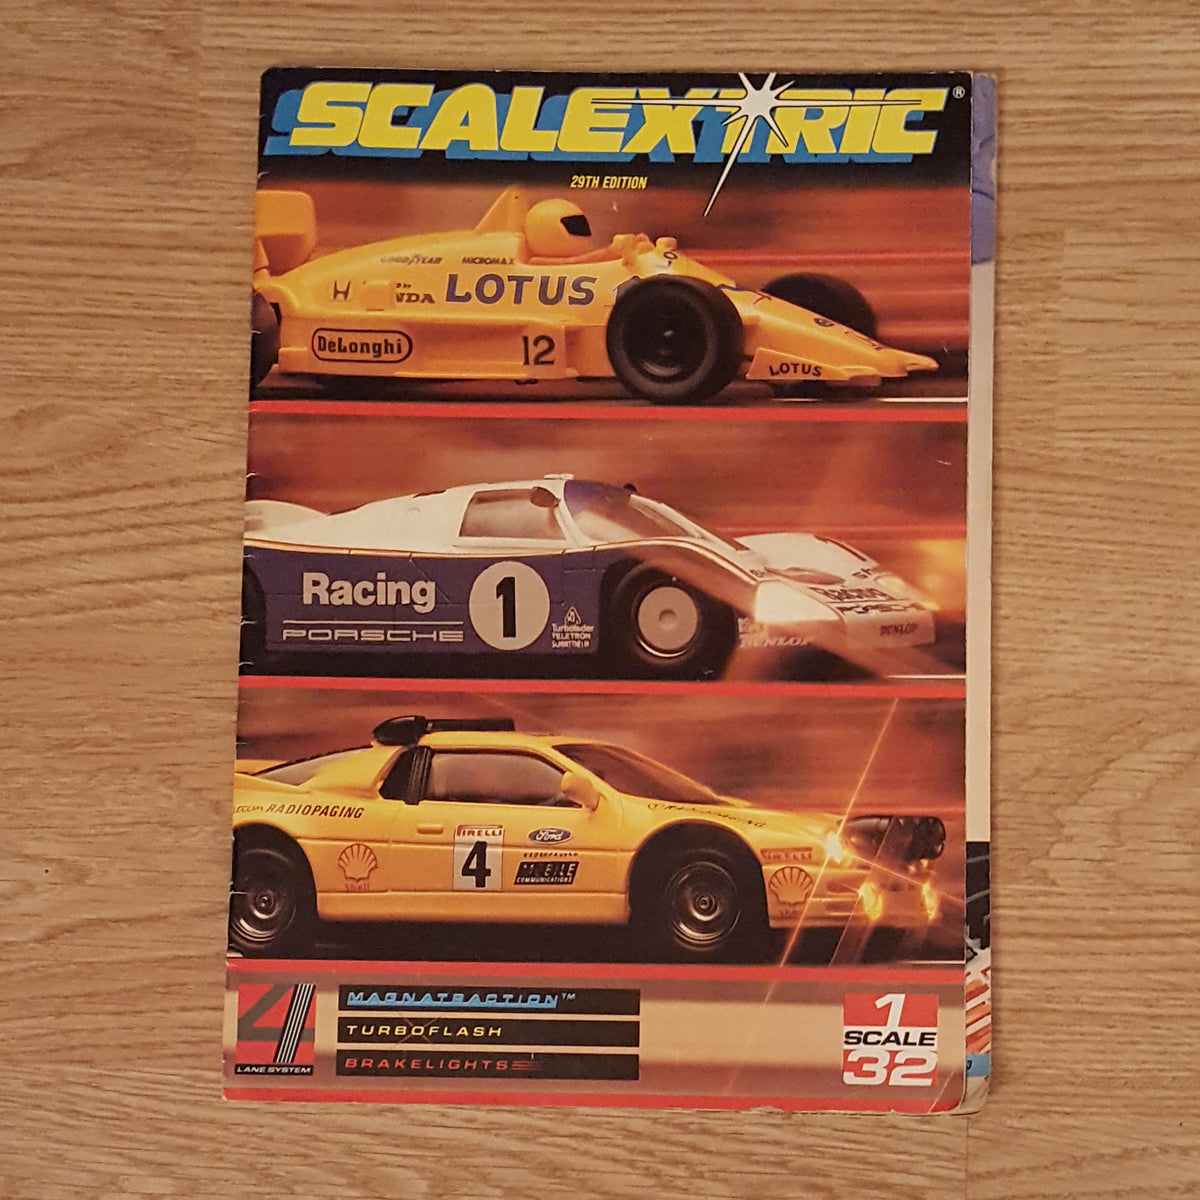 Scalextric Catalogue Literature Magazine - C505 1988 29th Edition